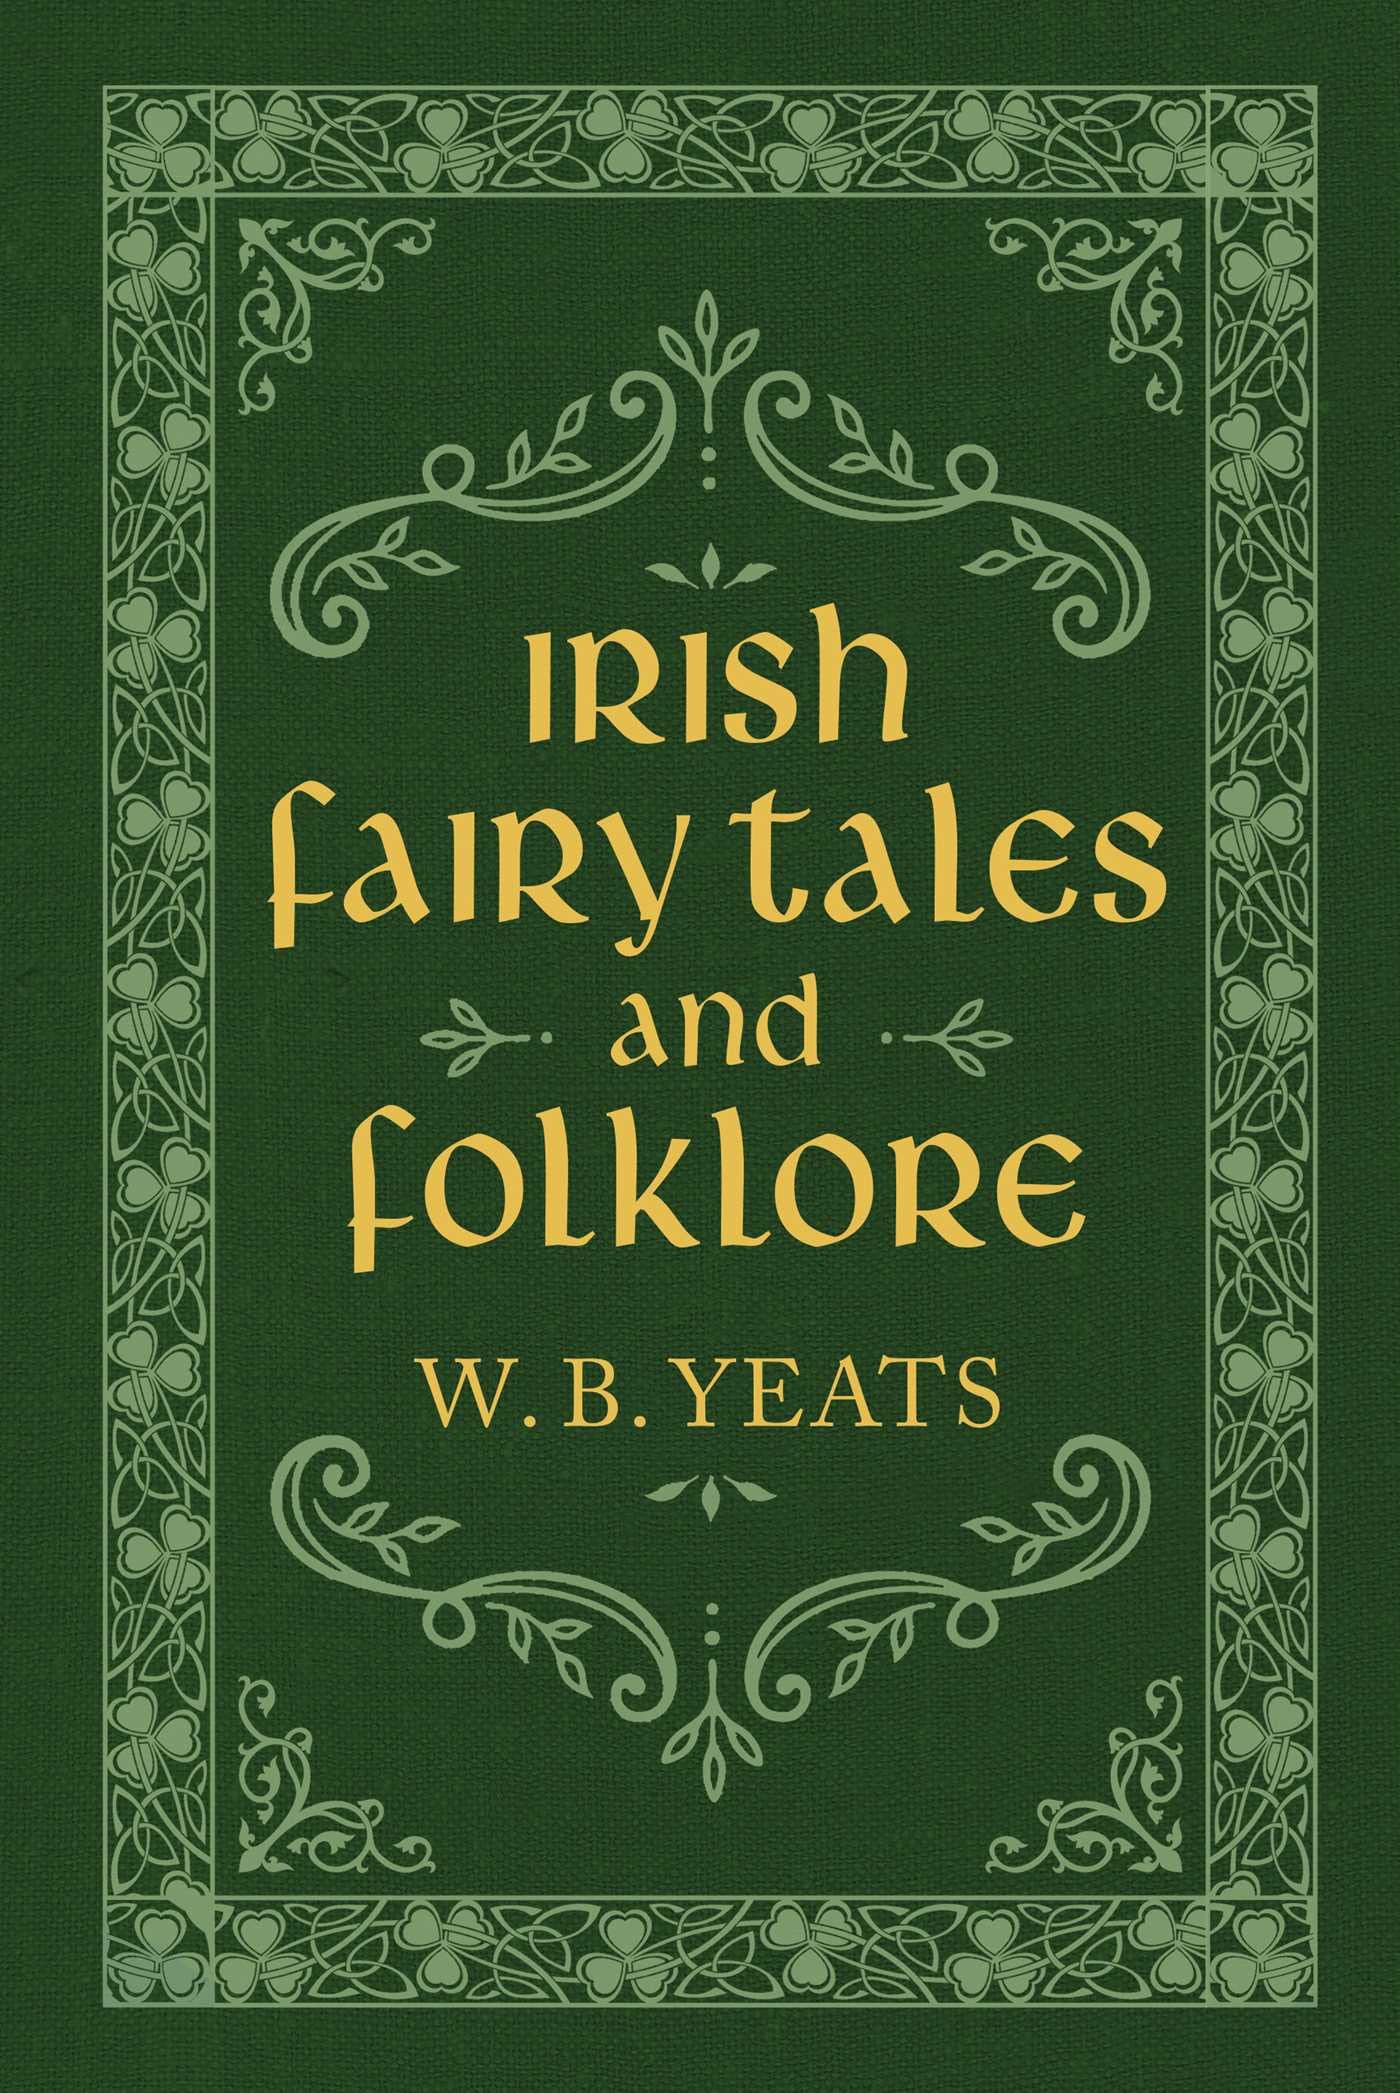 Irish Fairy Tales and Folklore W.B. Yeats